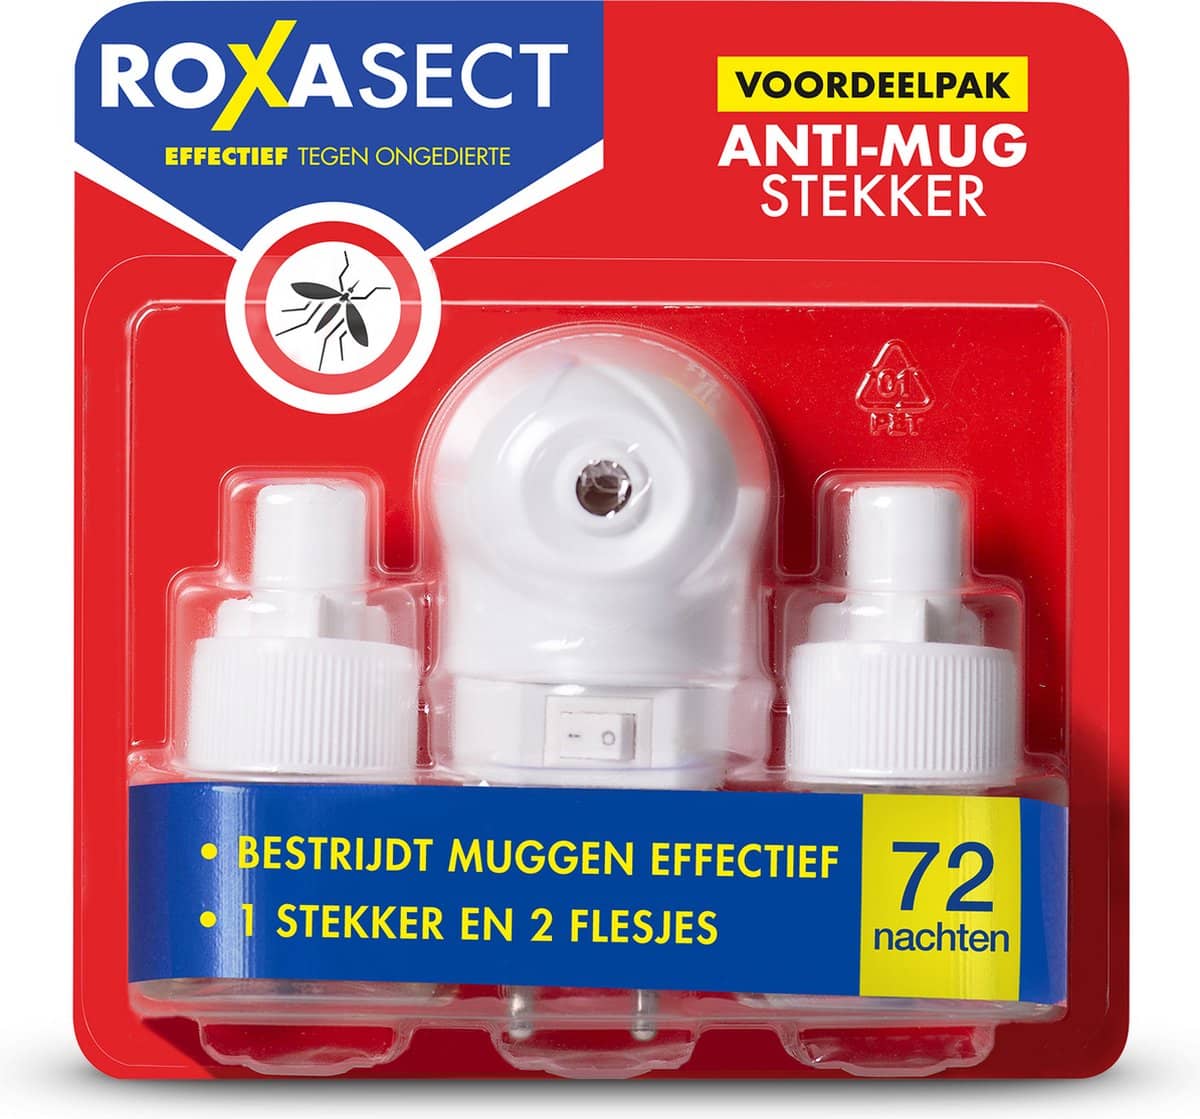 Roxasect Anti-Mug Muggenstekker. Eenvoudig maar effectief